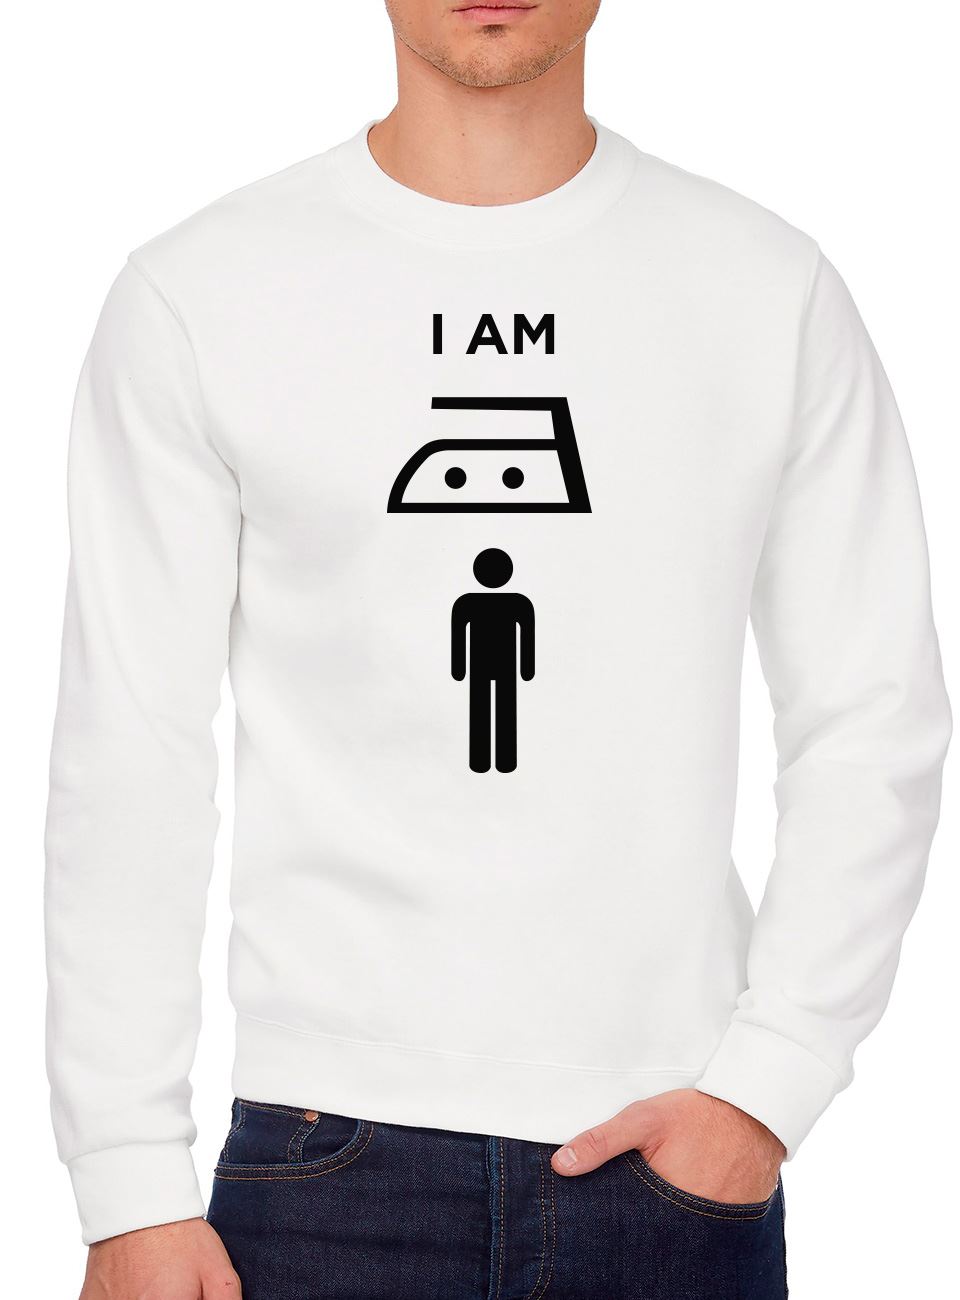 I am Iron Man - Youth & Mens Sweatshirt